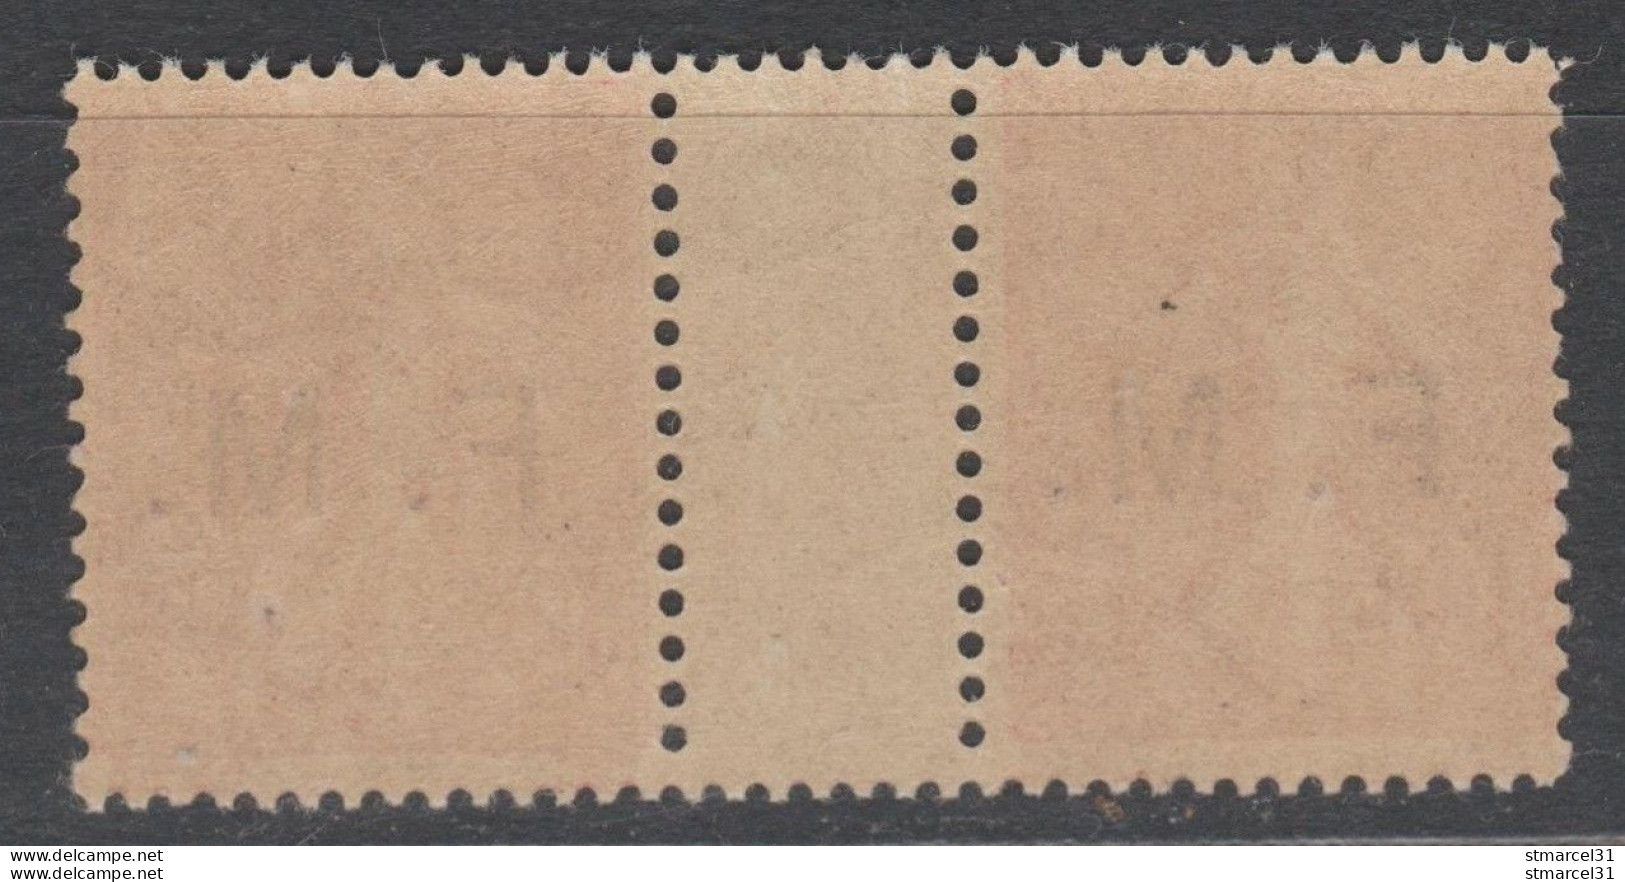 1er SERVI GRAND LUXE PAIRE INTERPANNEAUX N°4  RRR 1 CENTRAGE PARFAIT Neuf** Cote>295€ - Military Postage Stamps